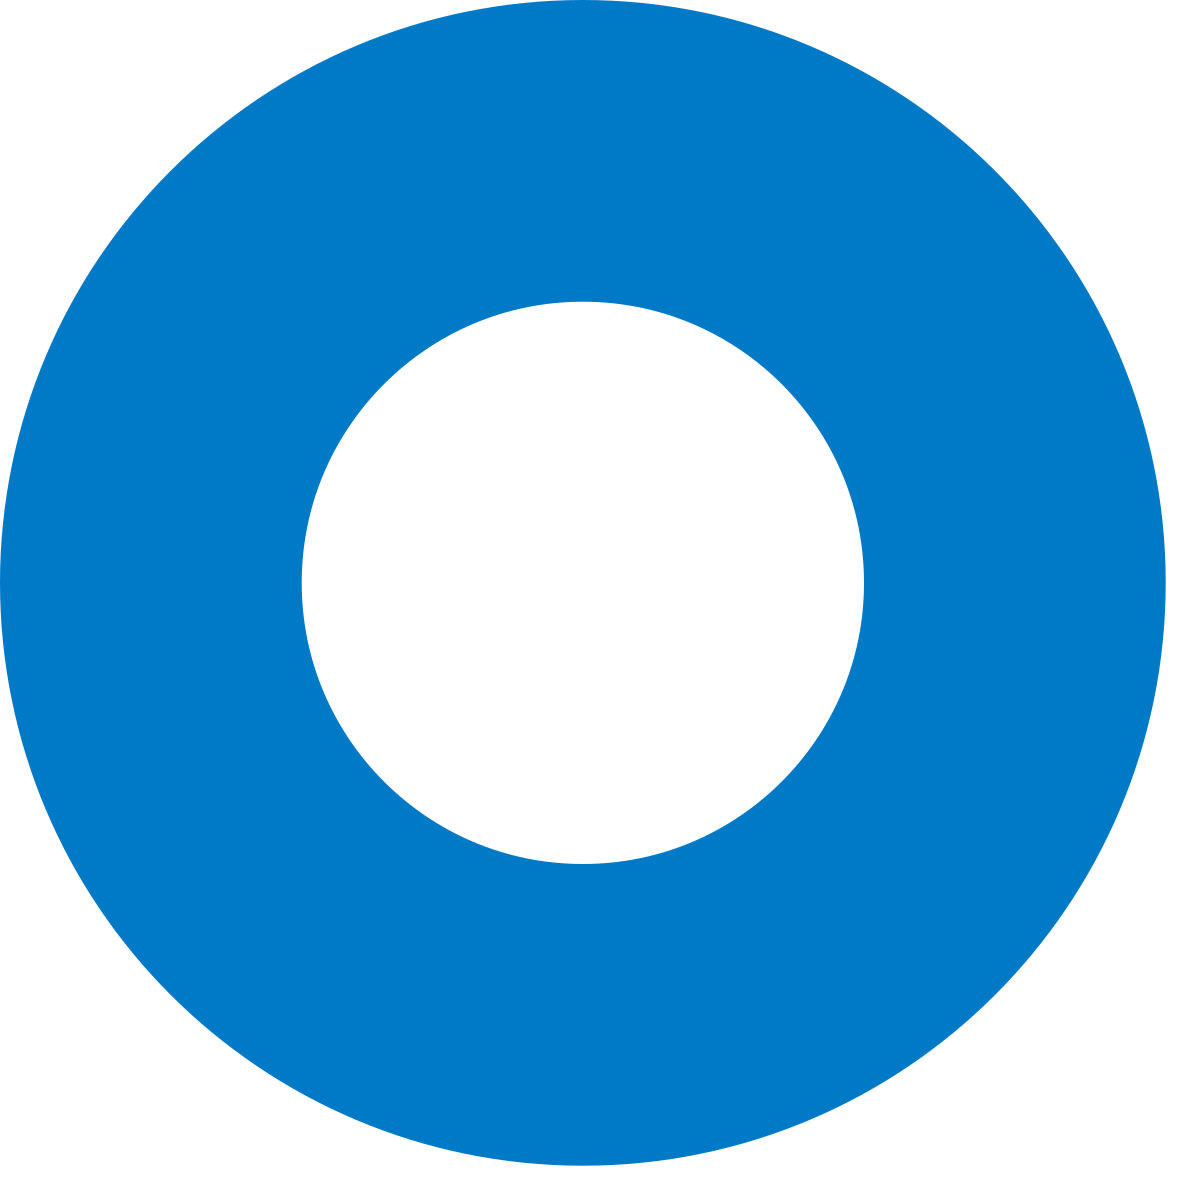 https://upload.wikimedia.org/wikipedia/commons/thumb/8/85/Blue_circle_logo.svg/1200px-Blue_circle_logo.svg.png